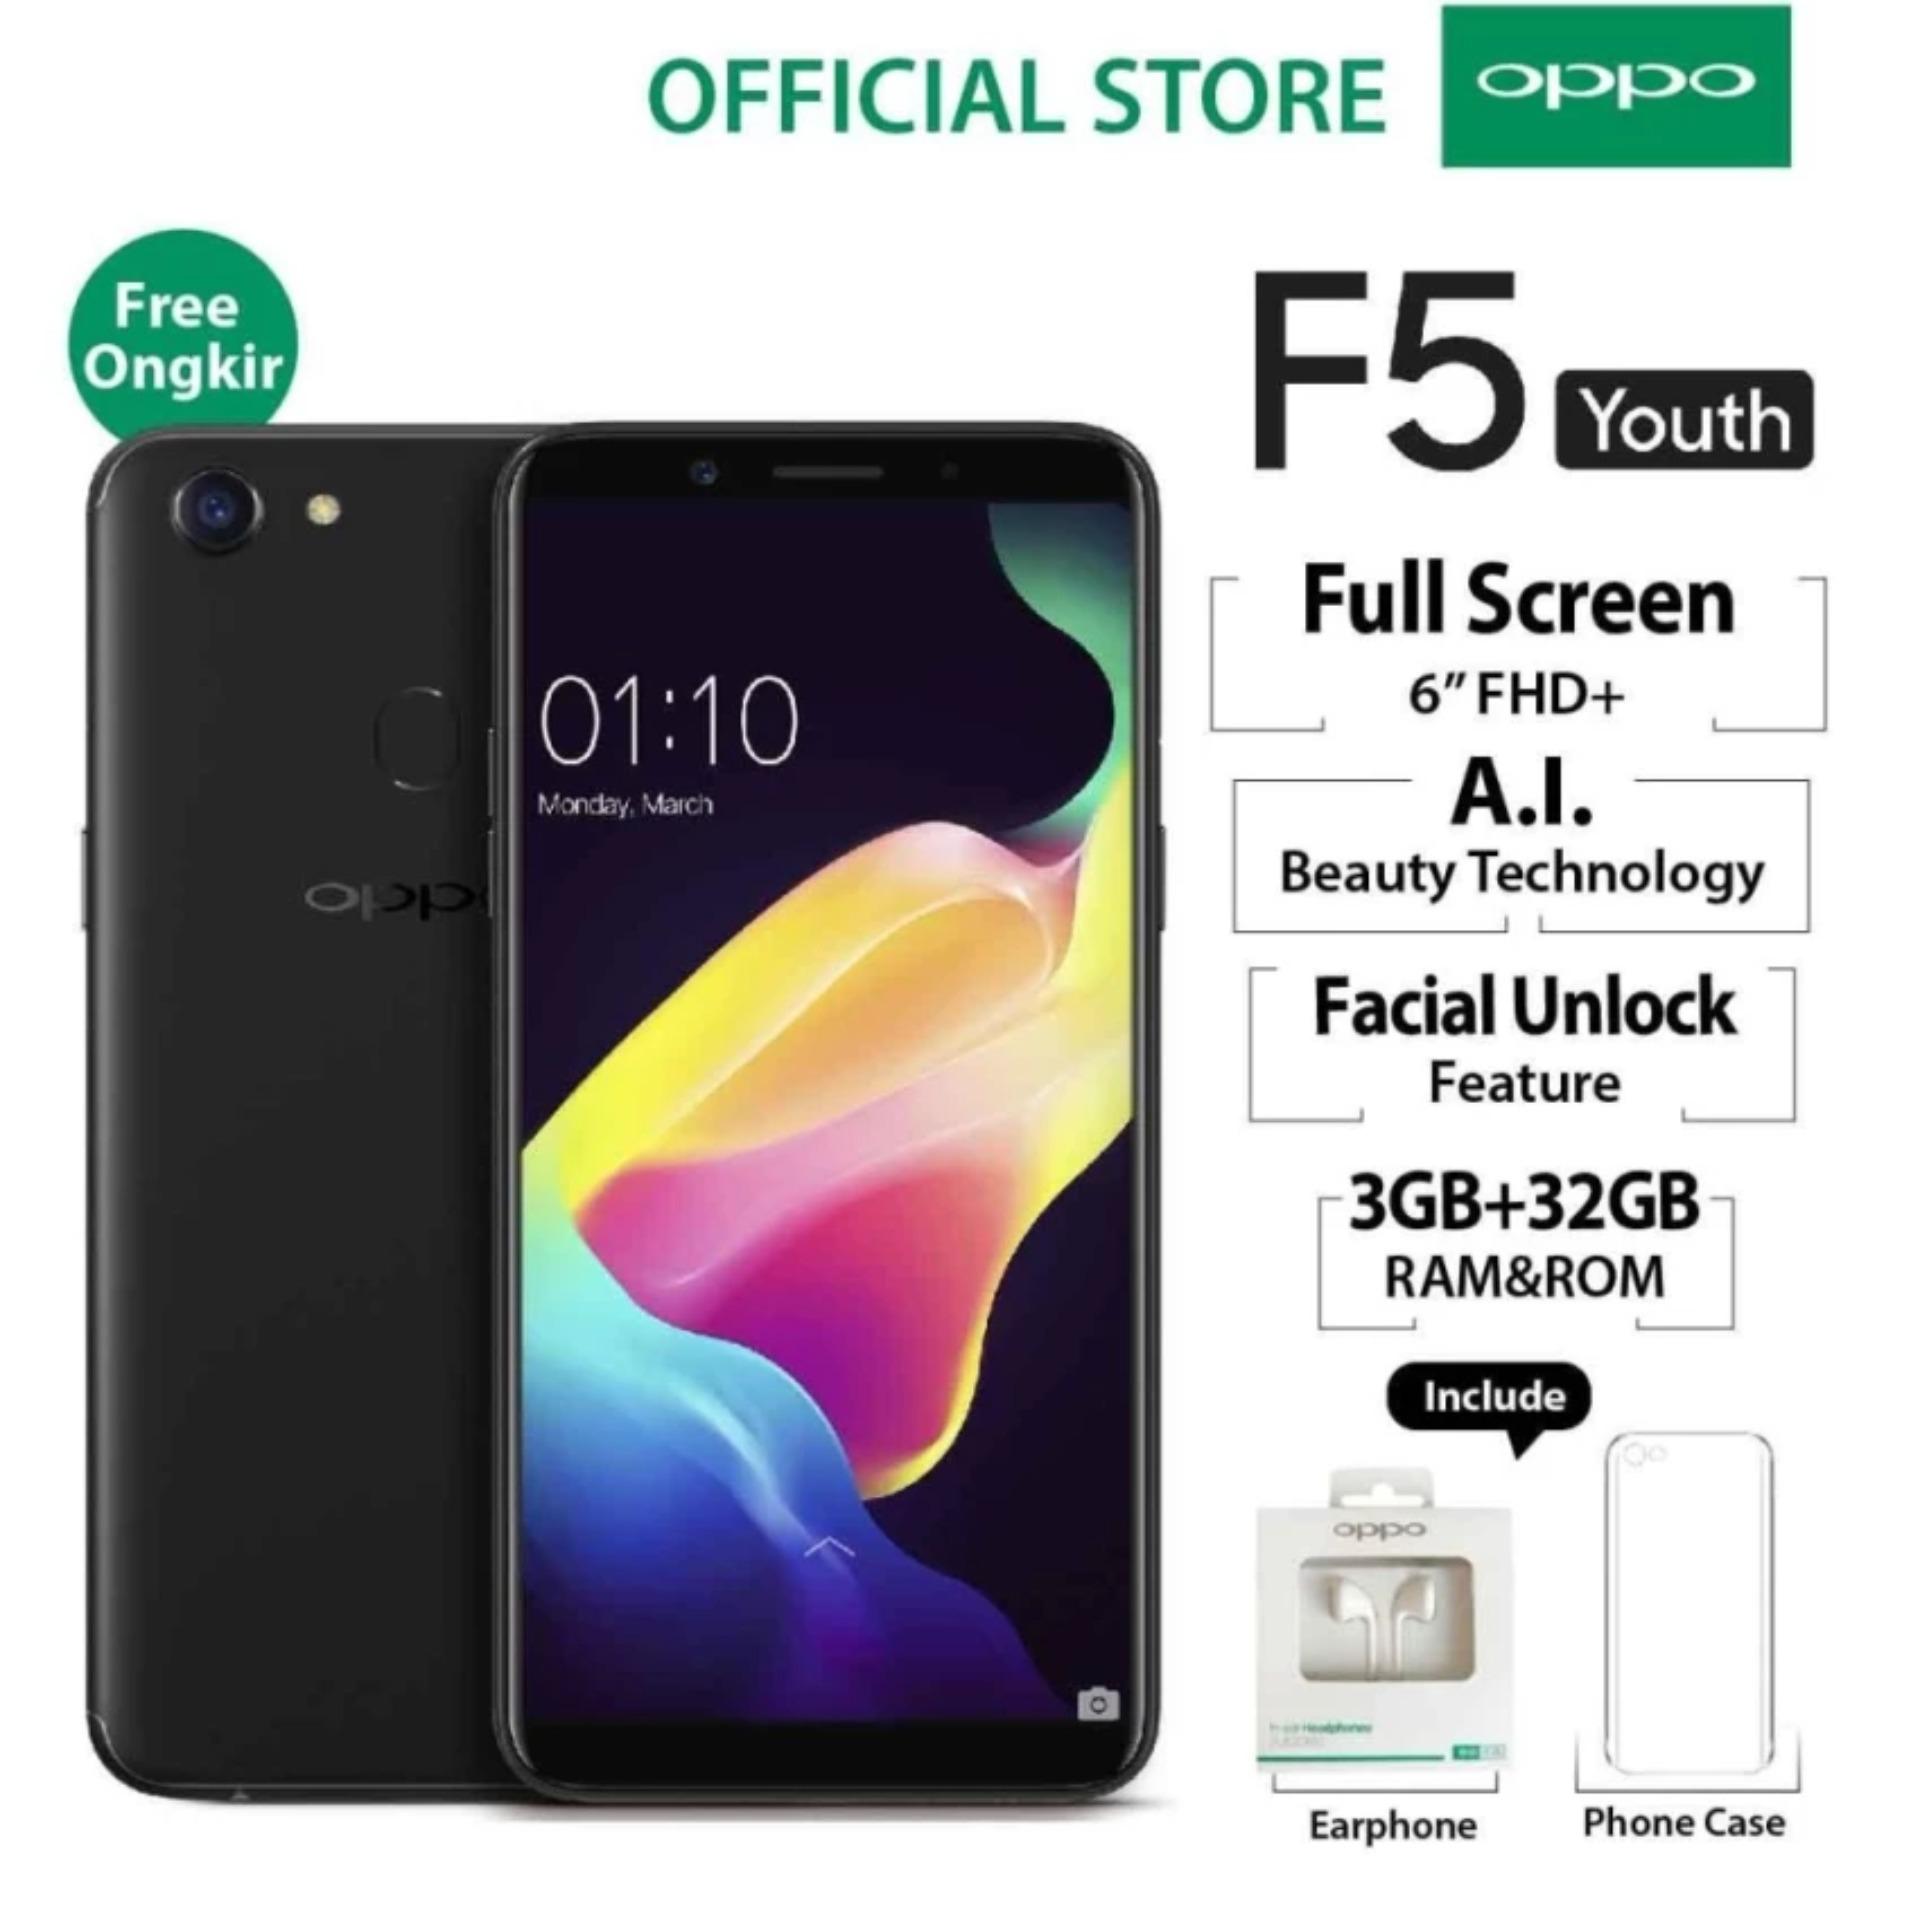 Oppo F5 Youth 3GB/32GB Black – Smartphone Full Screen 6” FHD+ ( Free Ongkir, Cicilan Tanpa Kartu Kredit, Garansi Resmi Oppo Indonesia)  